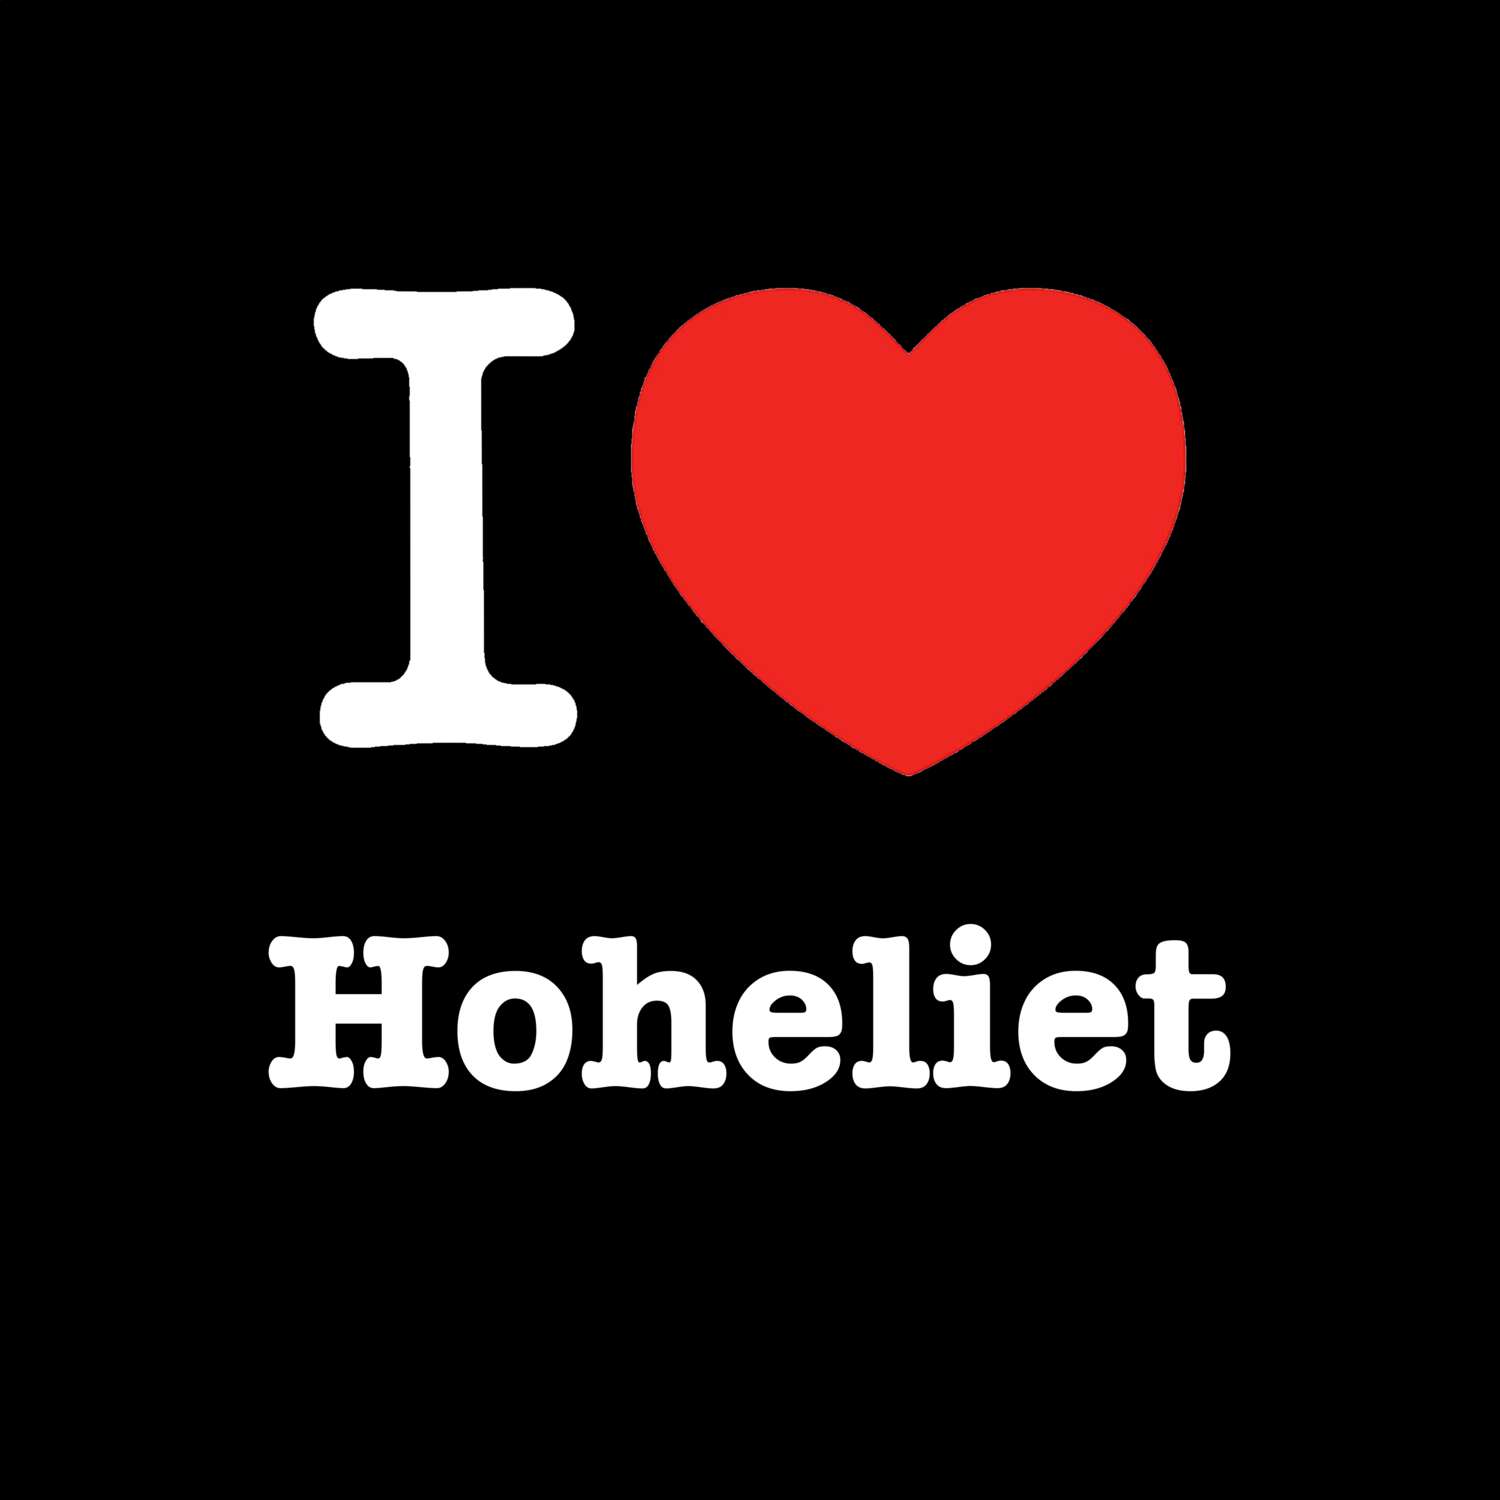 Hoheliet T-Shirt »I love«